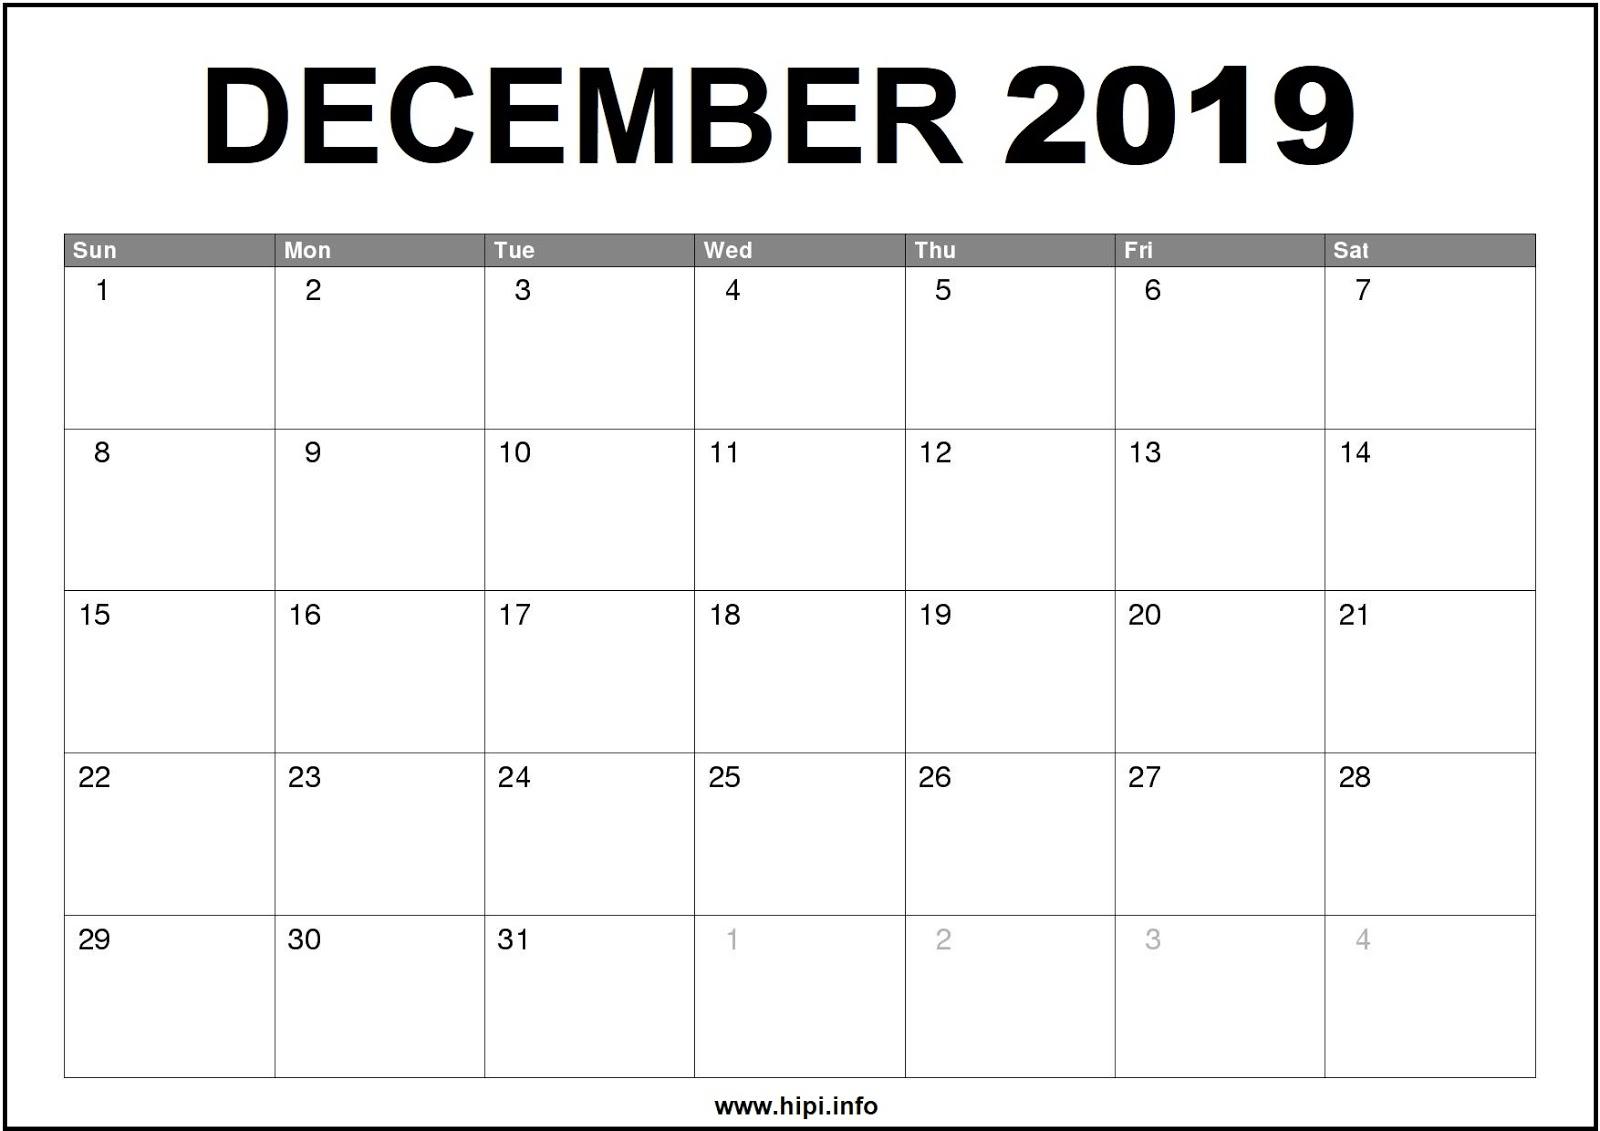 Twitter Headers / Facebook Covers / Wallpaper / Calendars: December